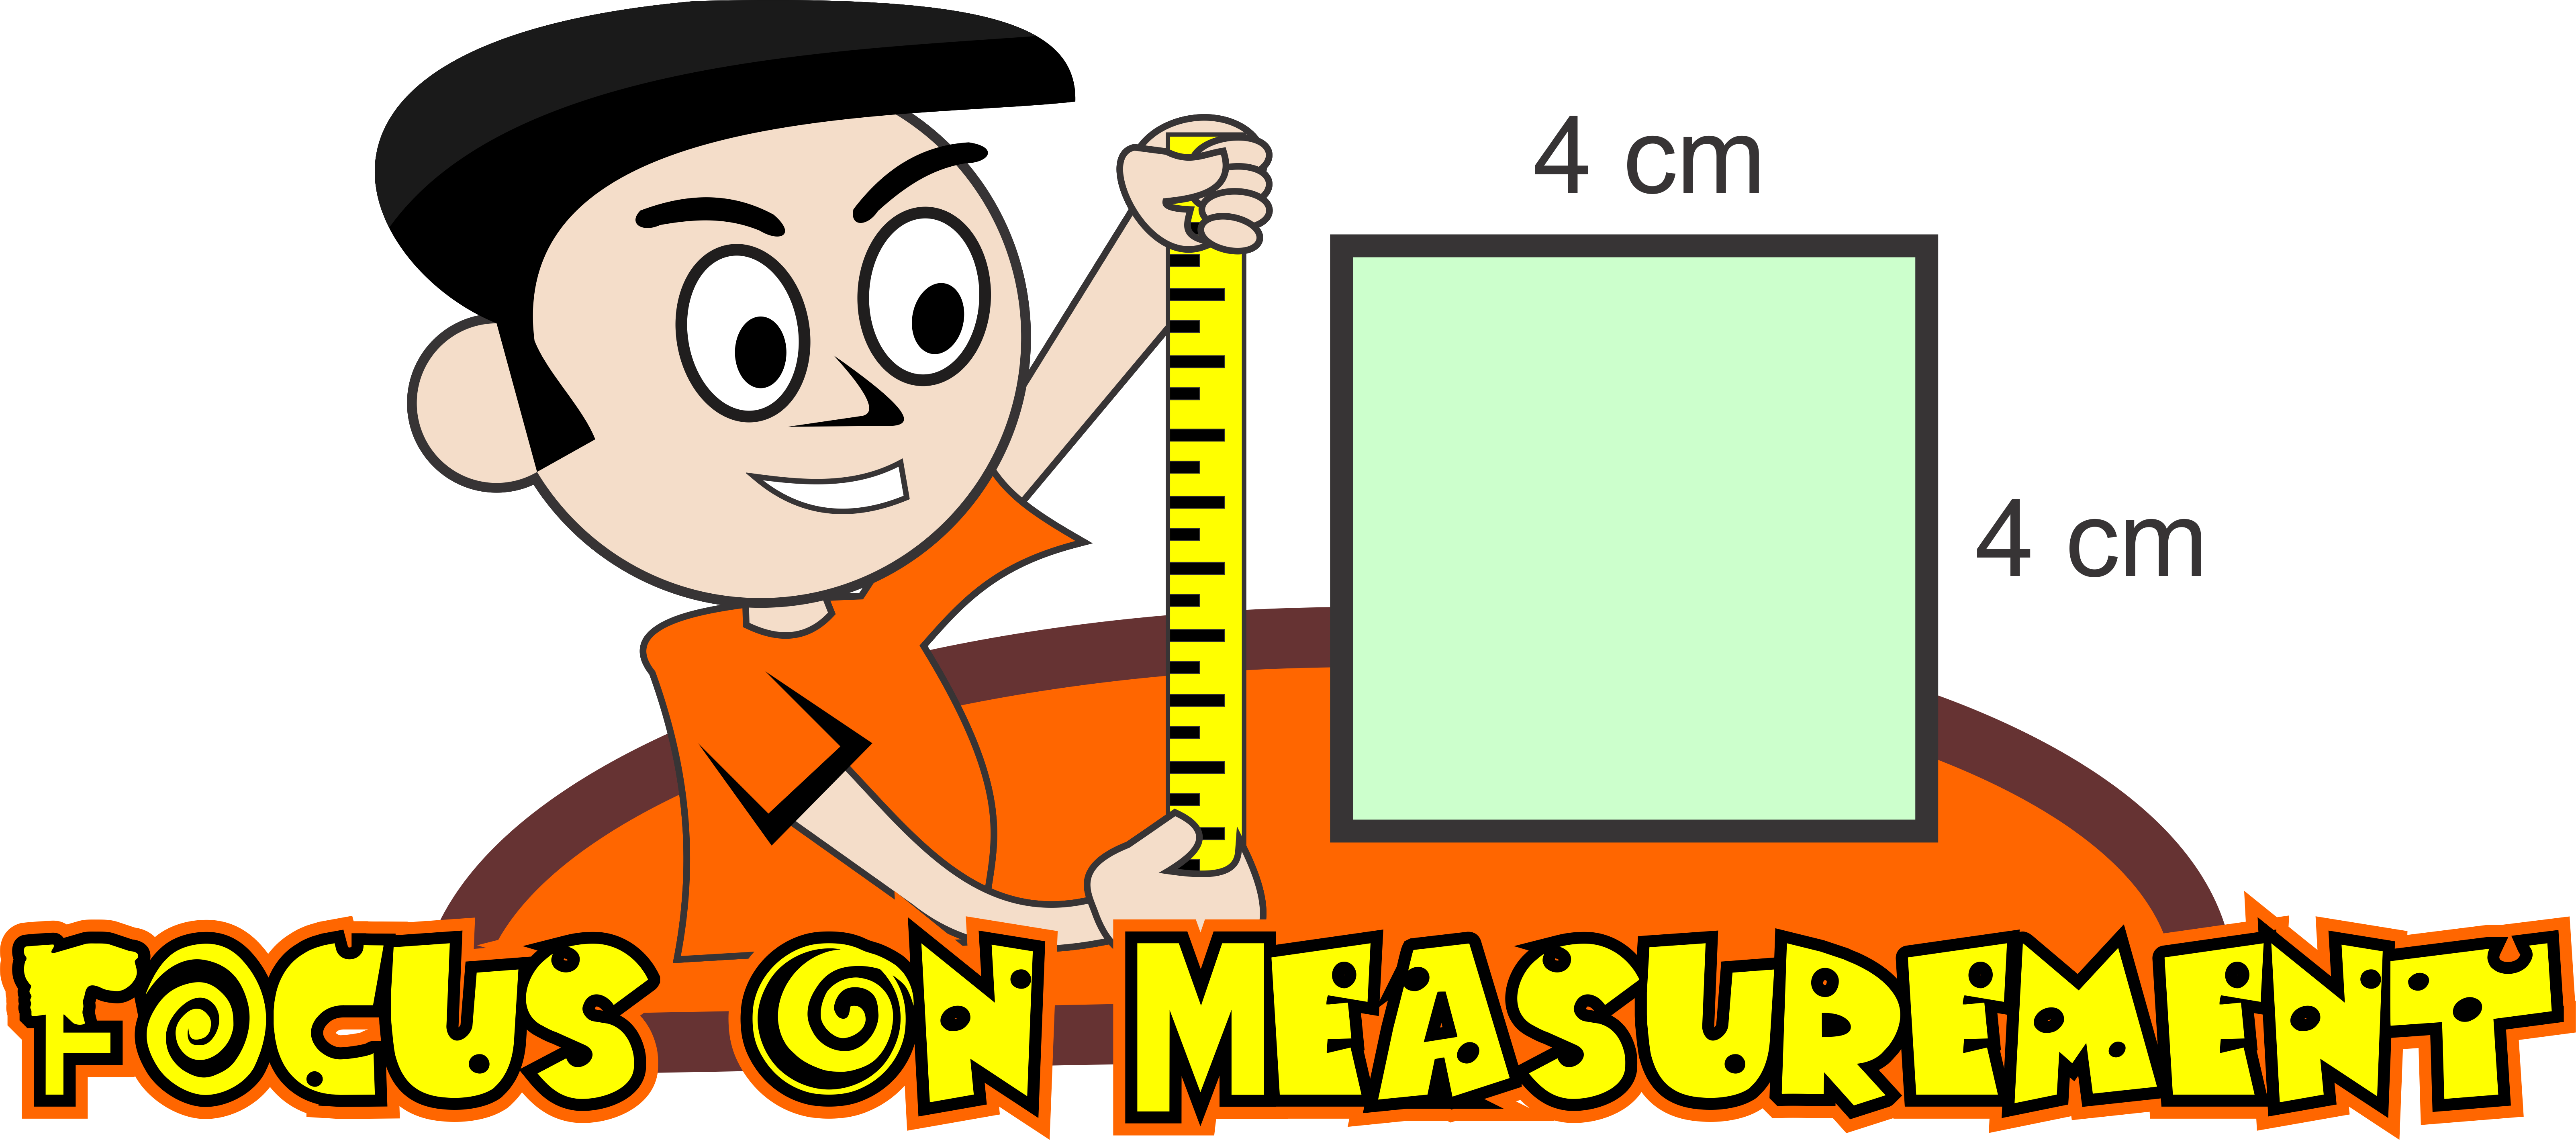 paperclip clipart nonstandard measurement